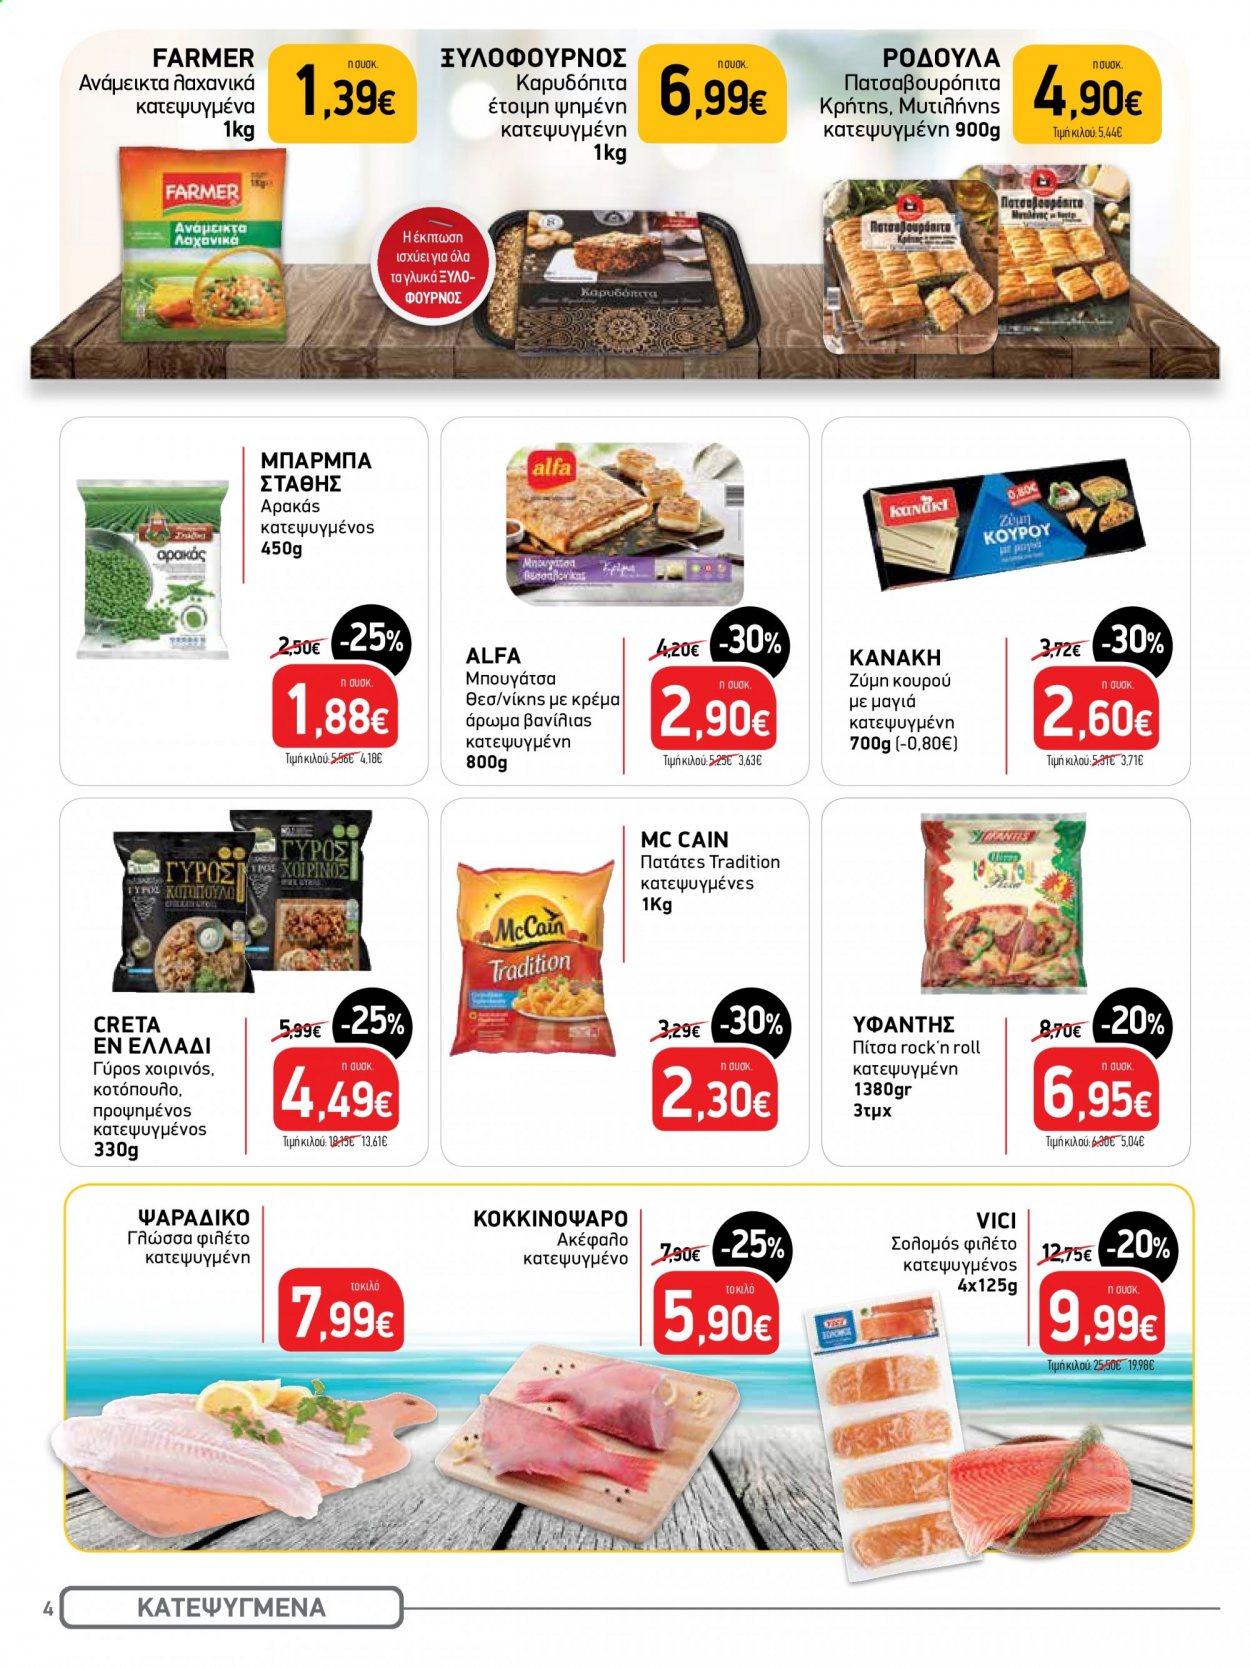 thumbnail - Φυλλάδια Bazaar - 05.02.2021 - 18.02.2021 - Εκπτωτικά προϊόντα - ζύμη, αρακάς, πατάτες, κοτόπουλο, κοκκινόψαρο, σολομός, πίτσα. Σελίδα 4.